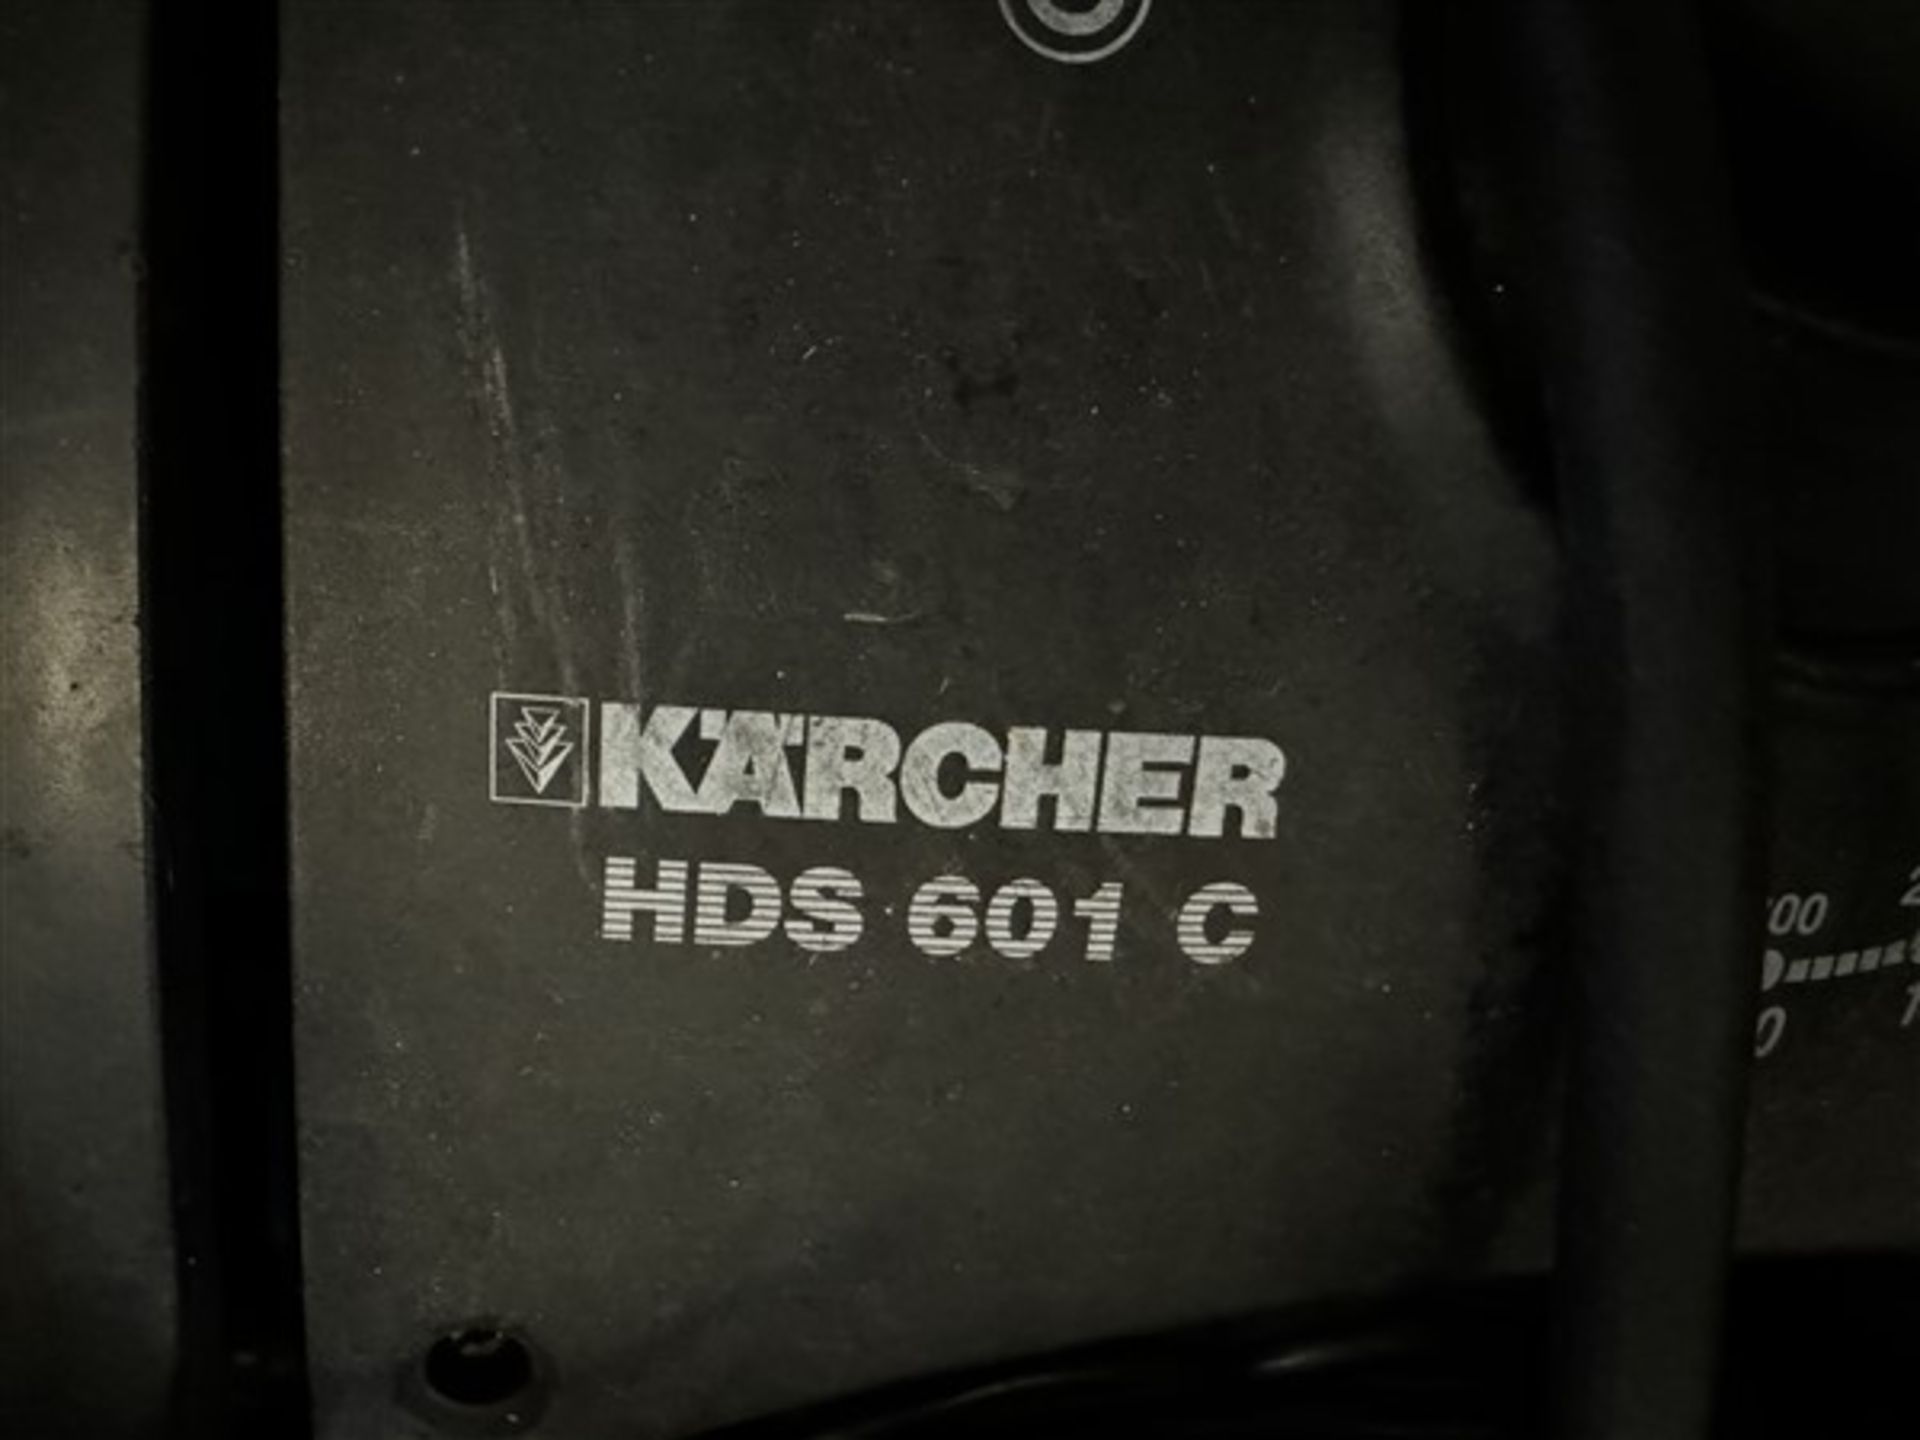 Karcher diesel powered hot & cold pressure washer, model HDS 601C - Image 5 of 7